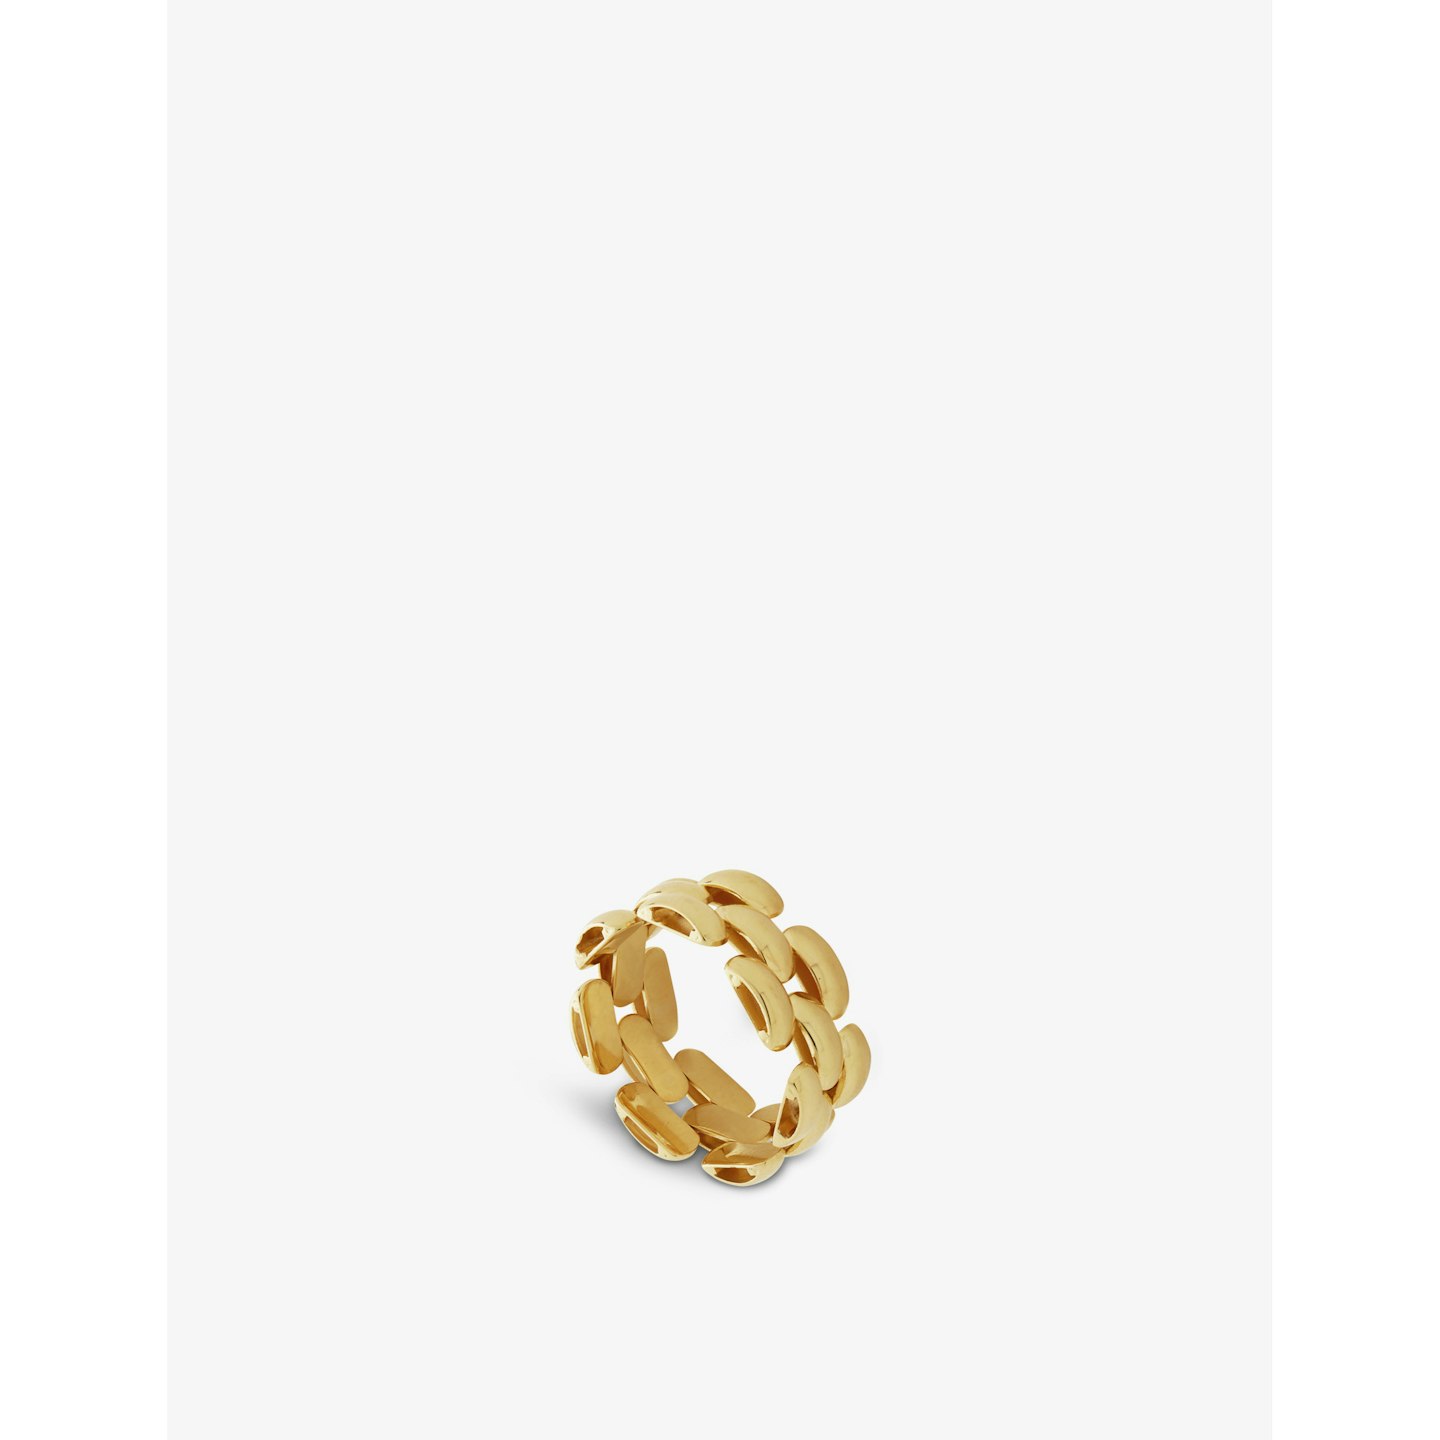 Monica Vinader, Doina Chain 18ct Recycled Gold Ring, £115 at Selfridges